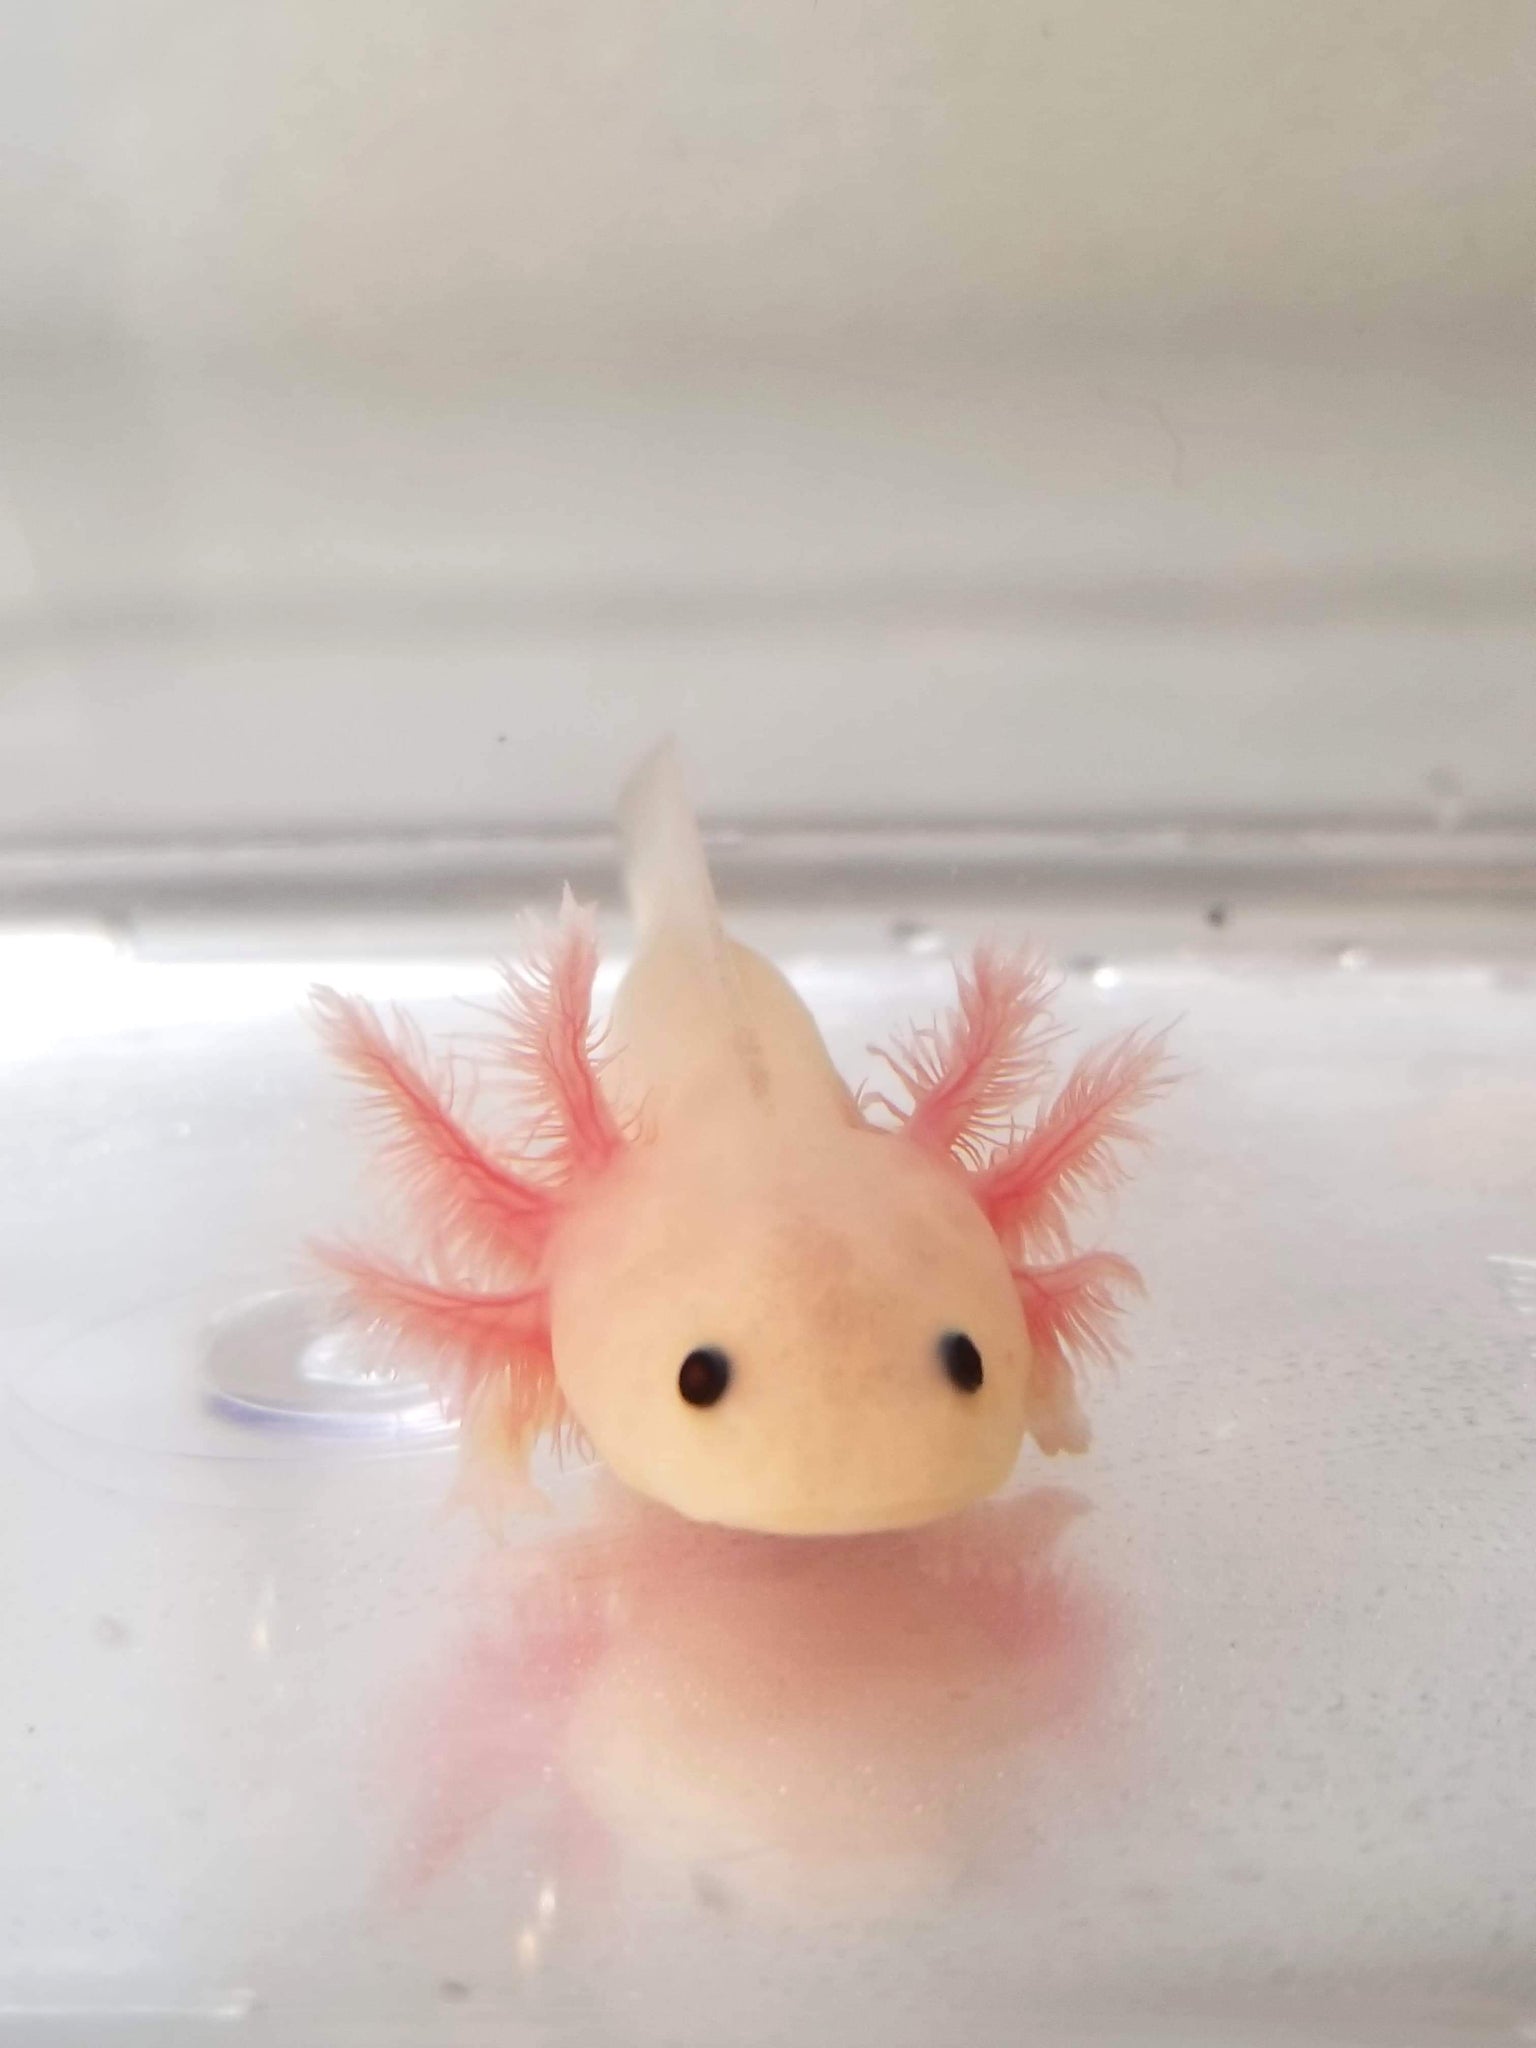 Leucistic axolotl